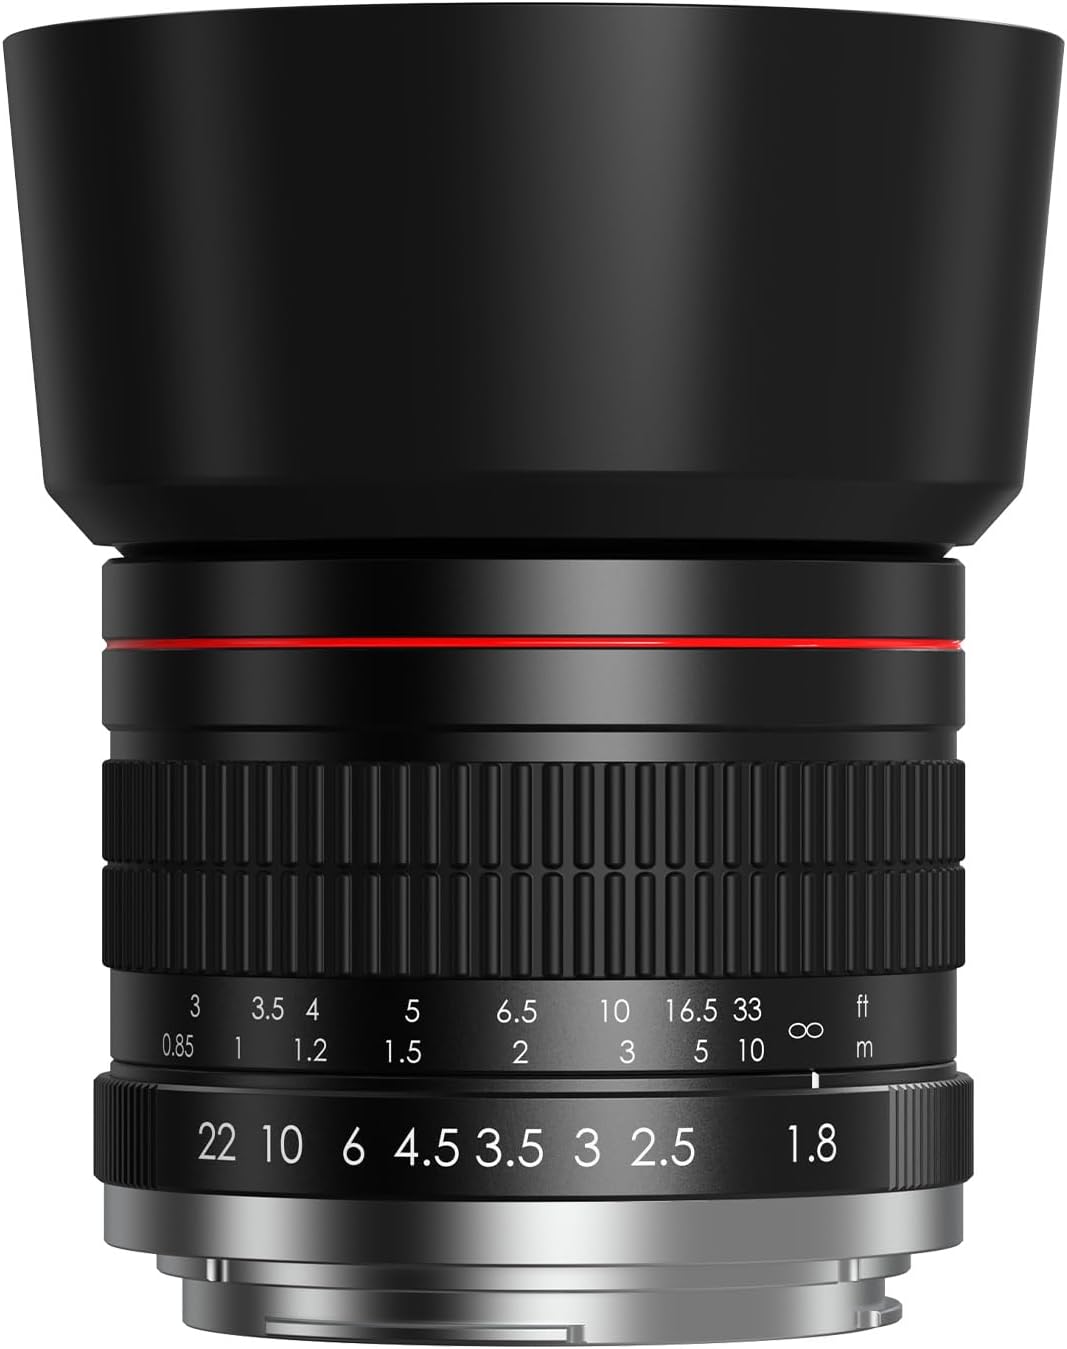 Lightdow 85mm F1.8 Manual Focus Portrait Lens